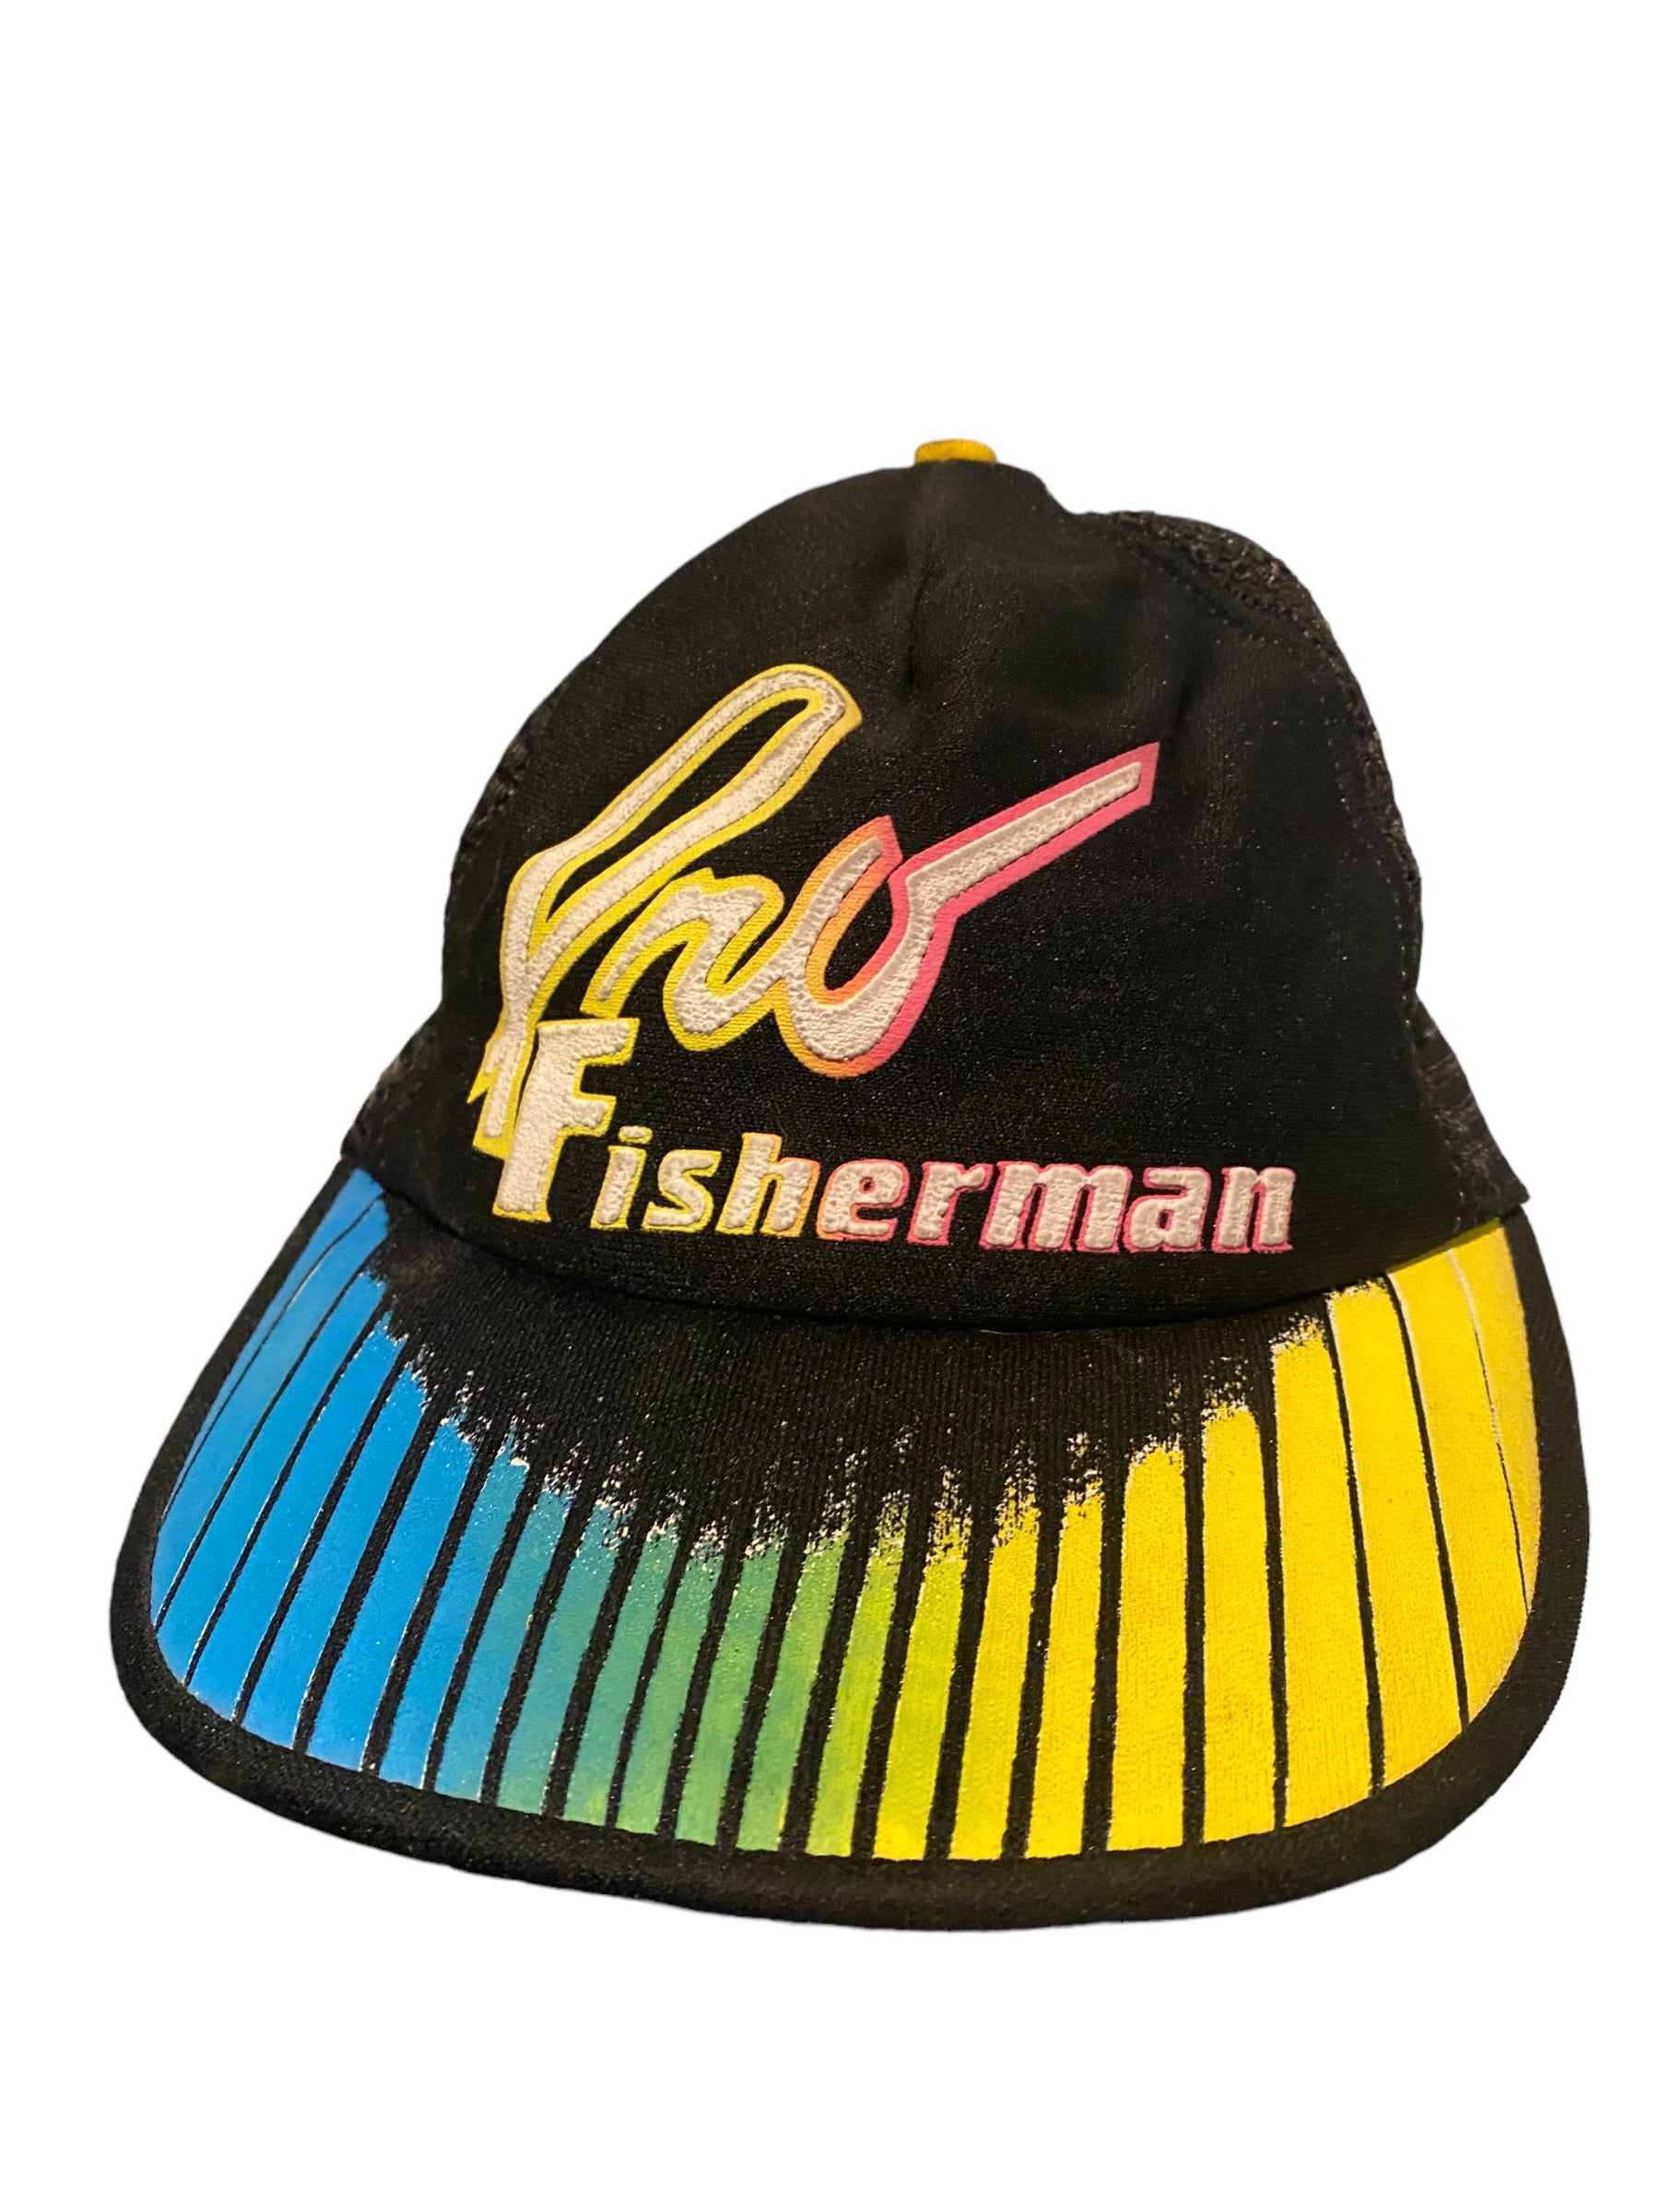 Vintage pro fisherman trucker hat snapback with long bill